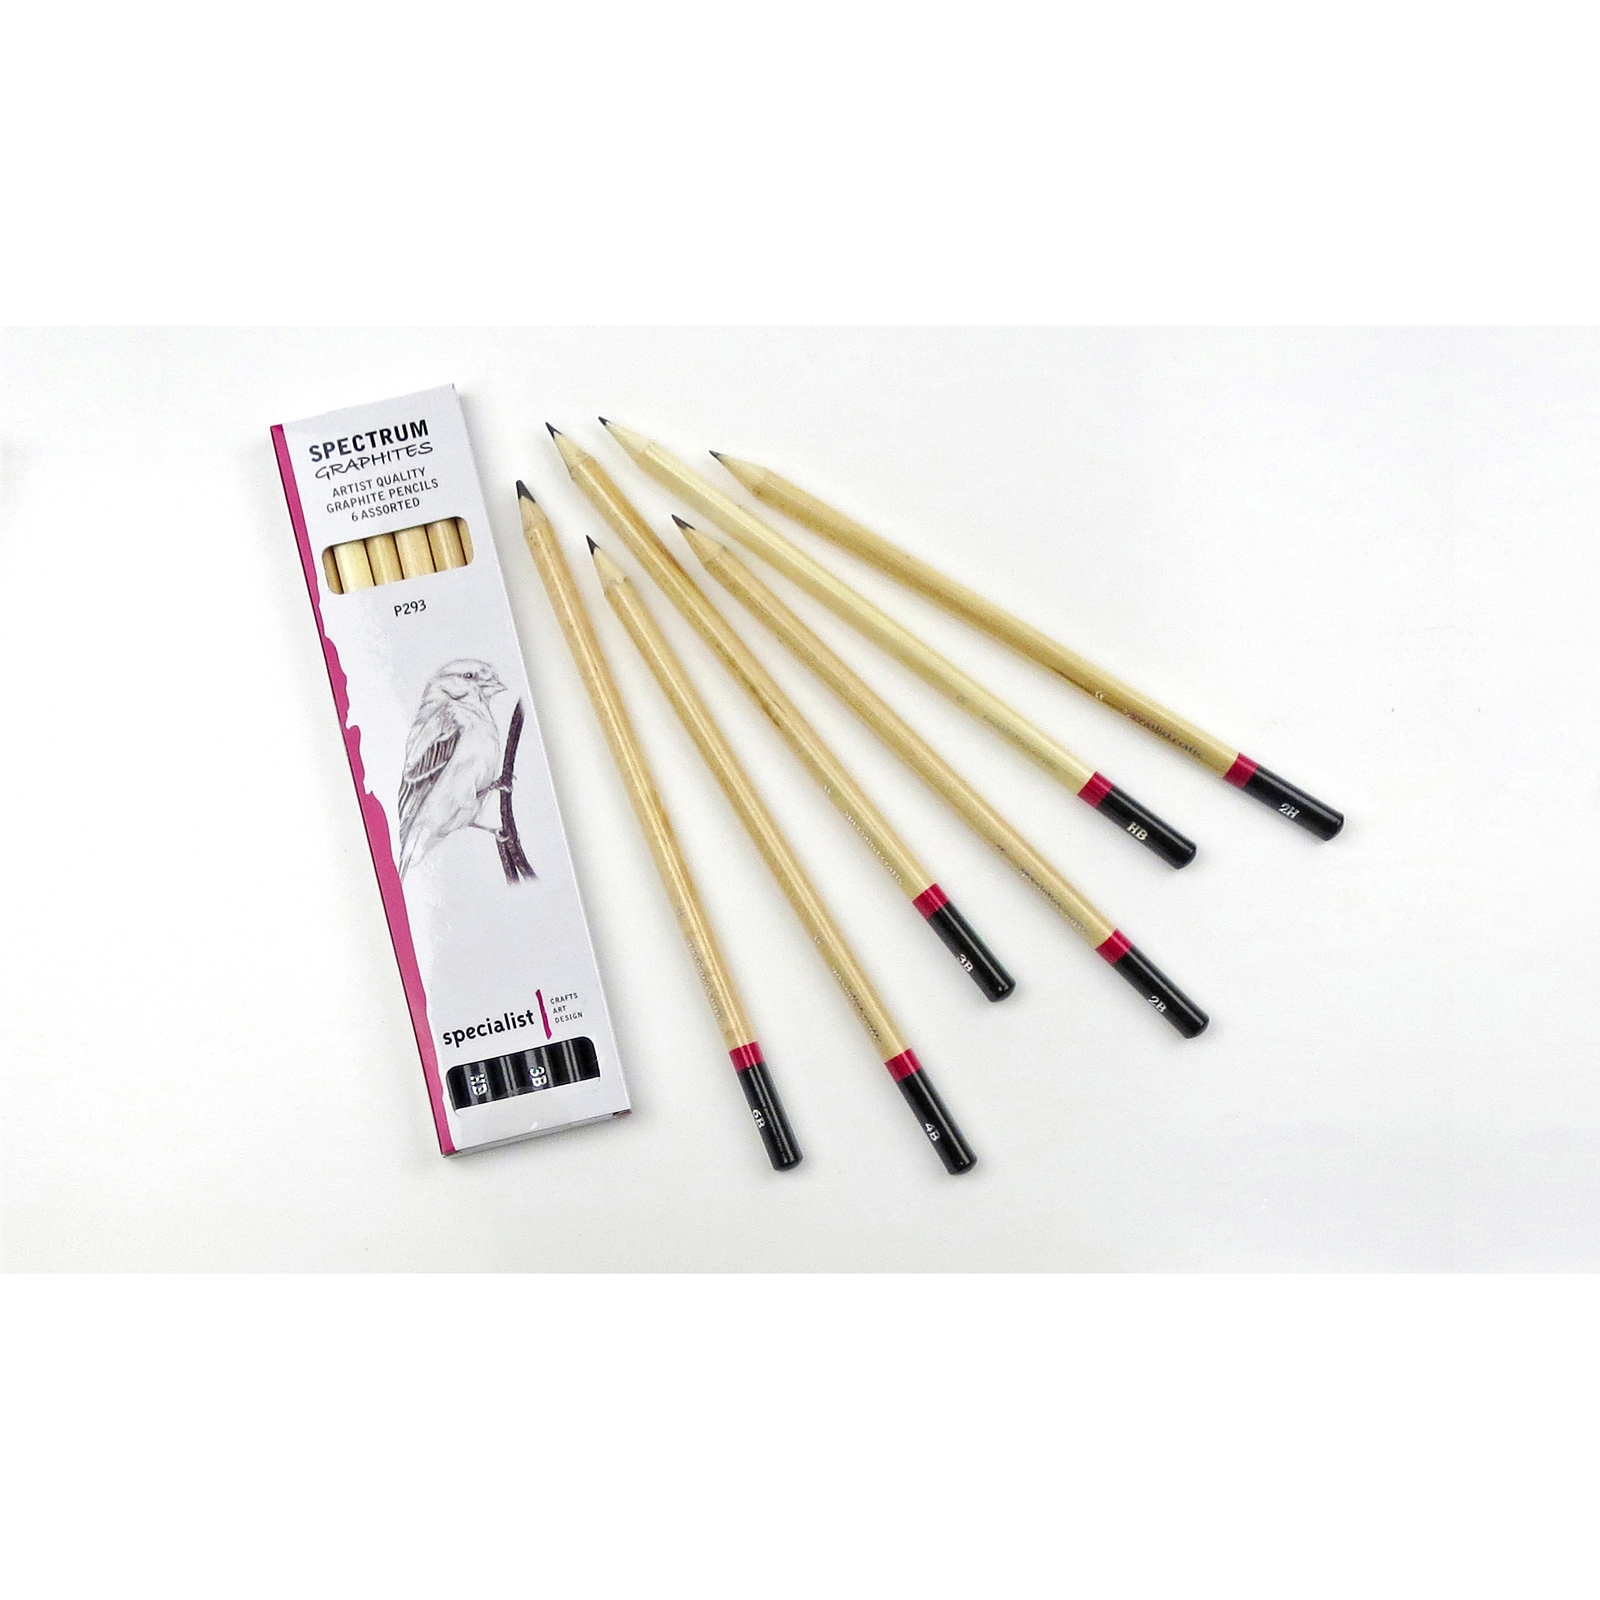 Specialist Crafts Spectrum Graphite Pencils - Assorted - Pack of 6